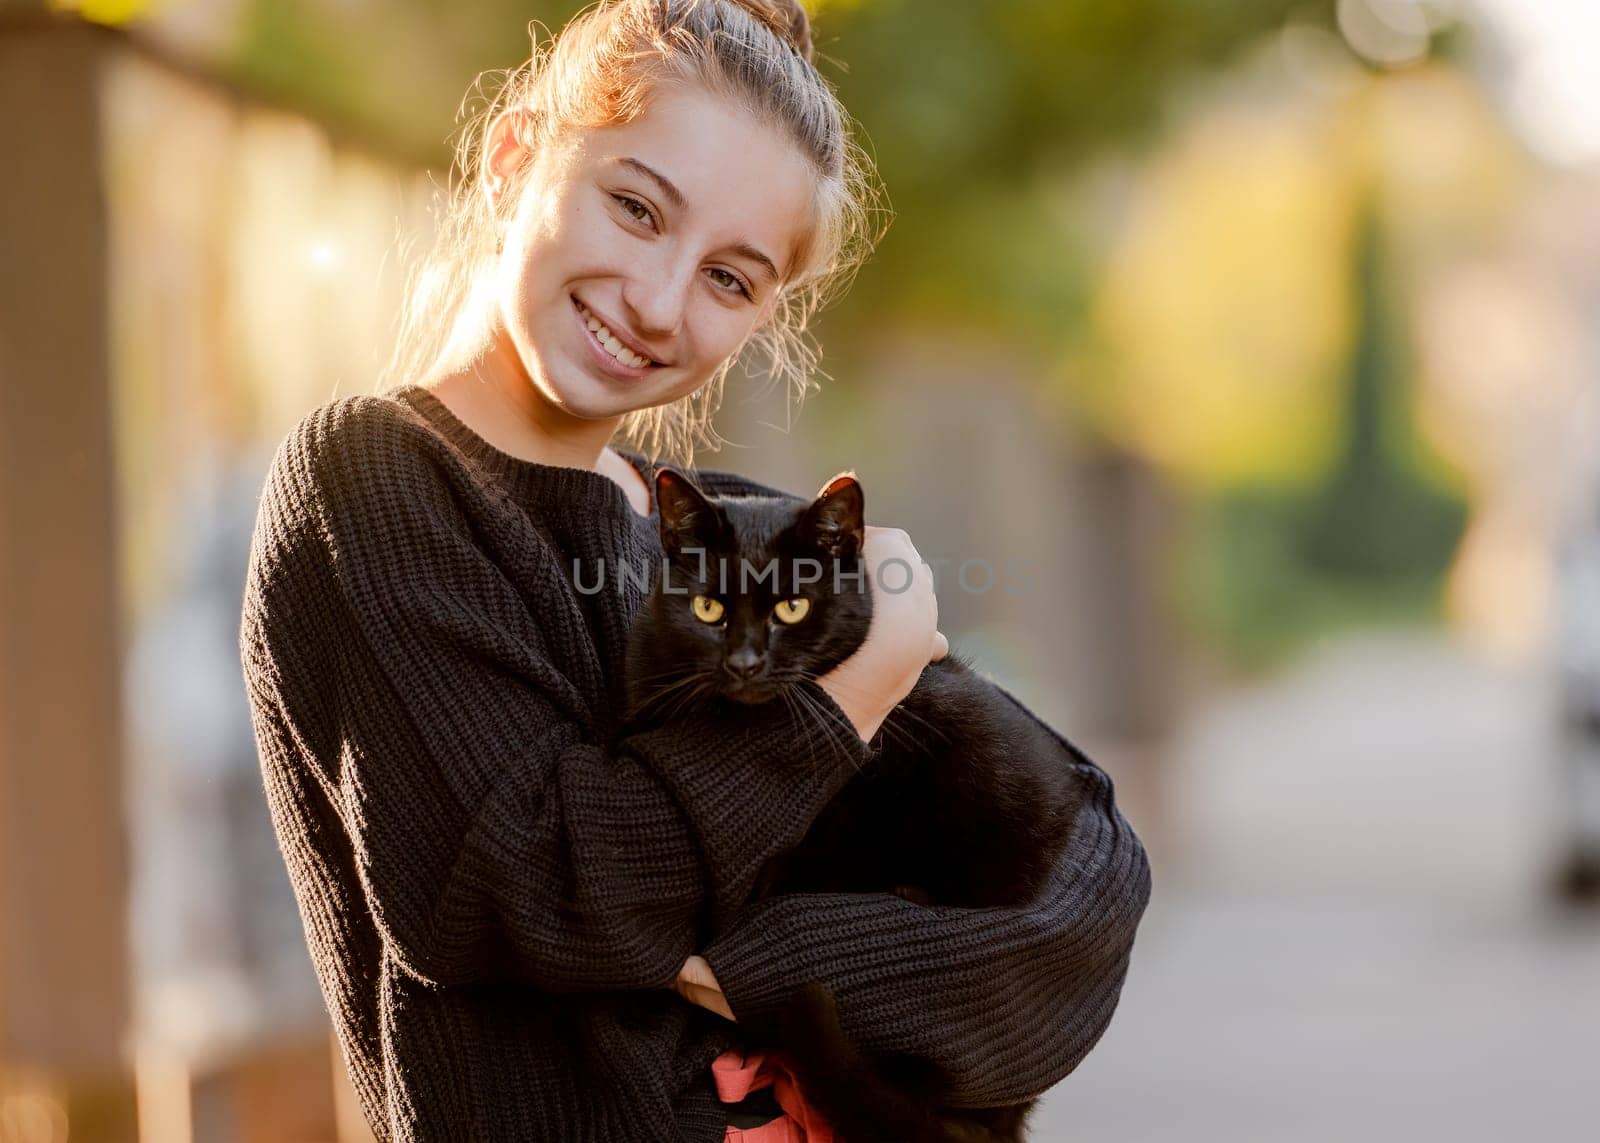 Teenage Girl Holds Black Cat In Hands by tan4ikk1